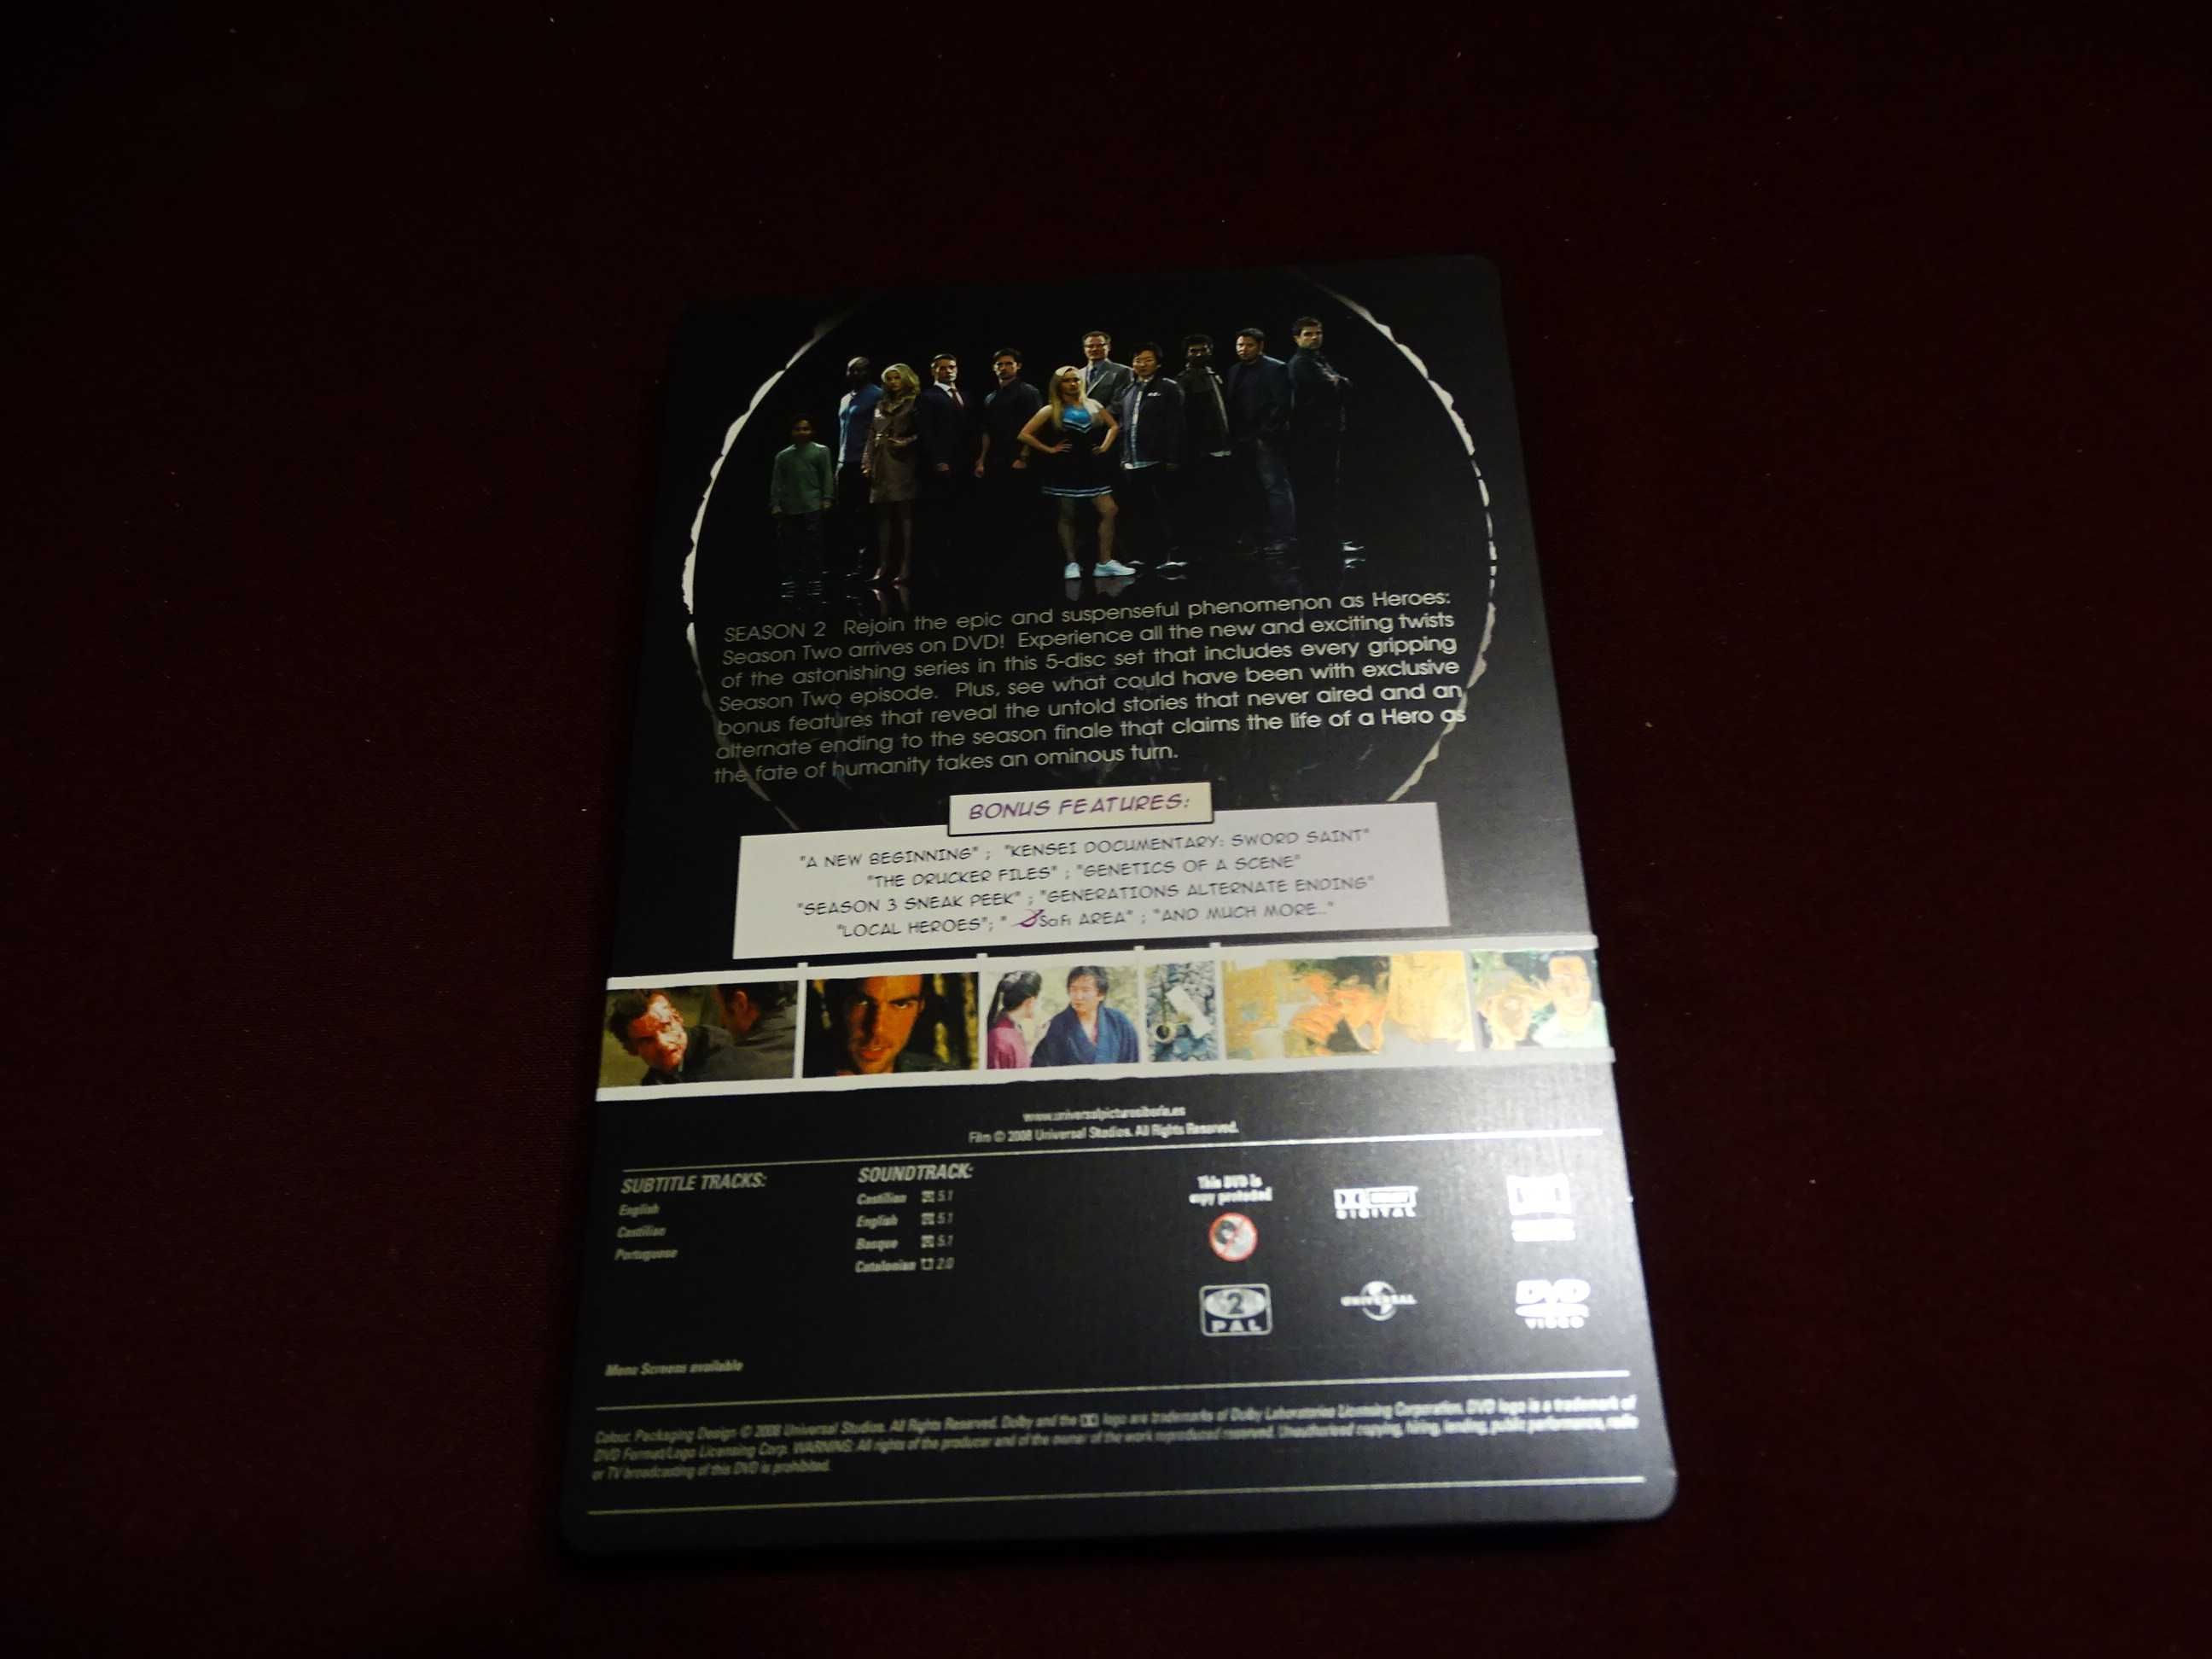 DVD-Heroes/Temporada 2/ESpecial edition-Caixa metalica 5 discos